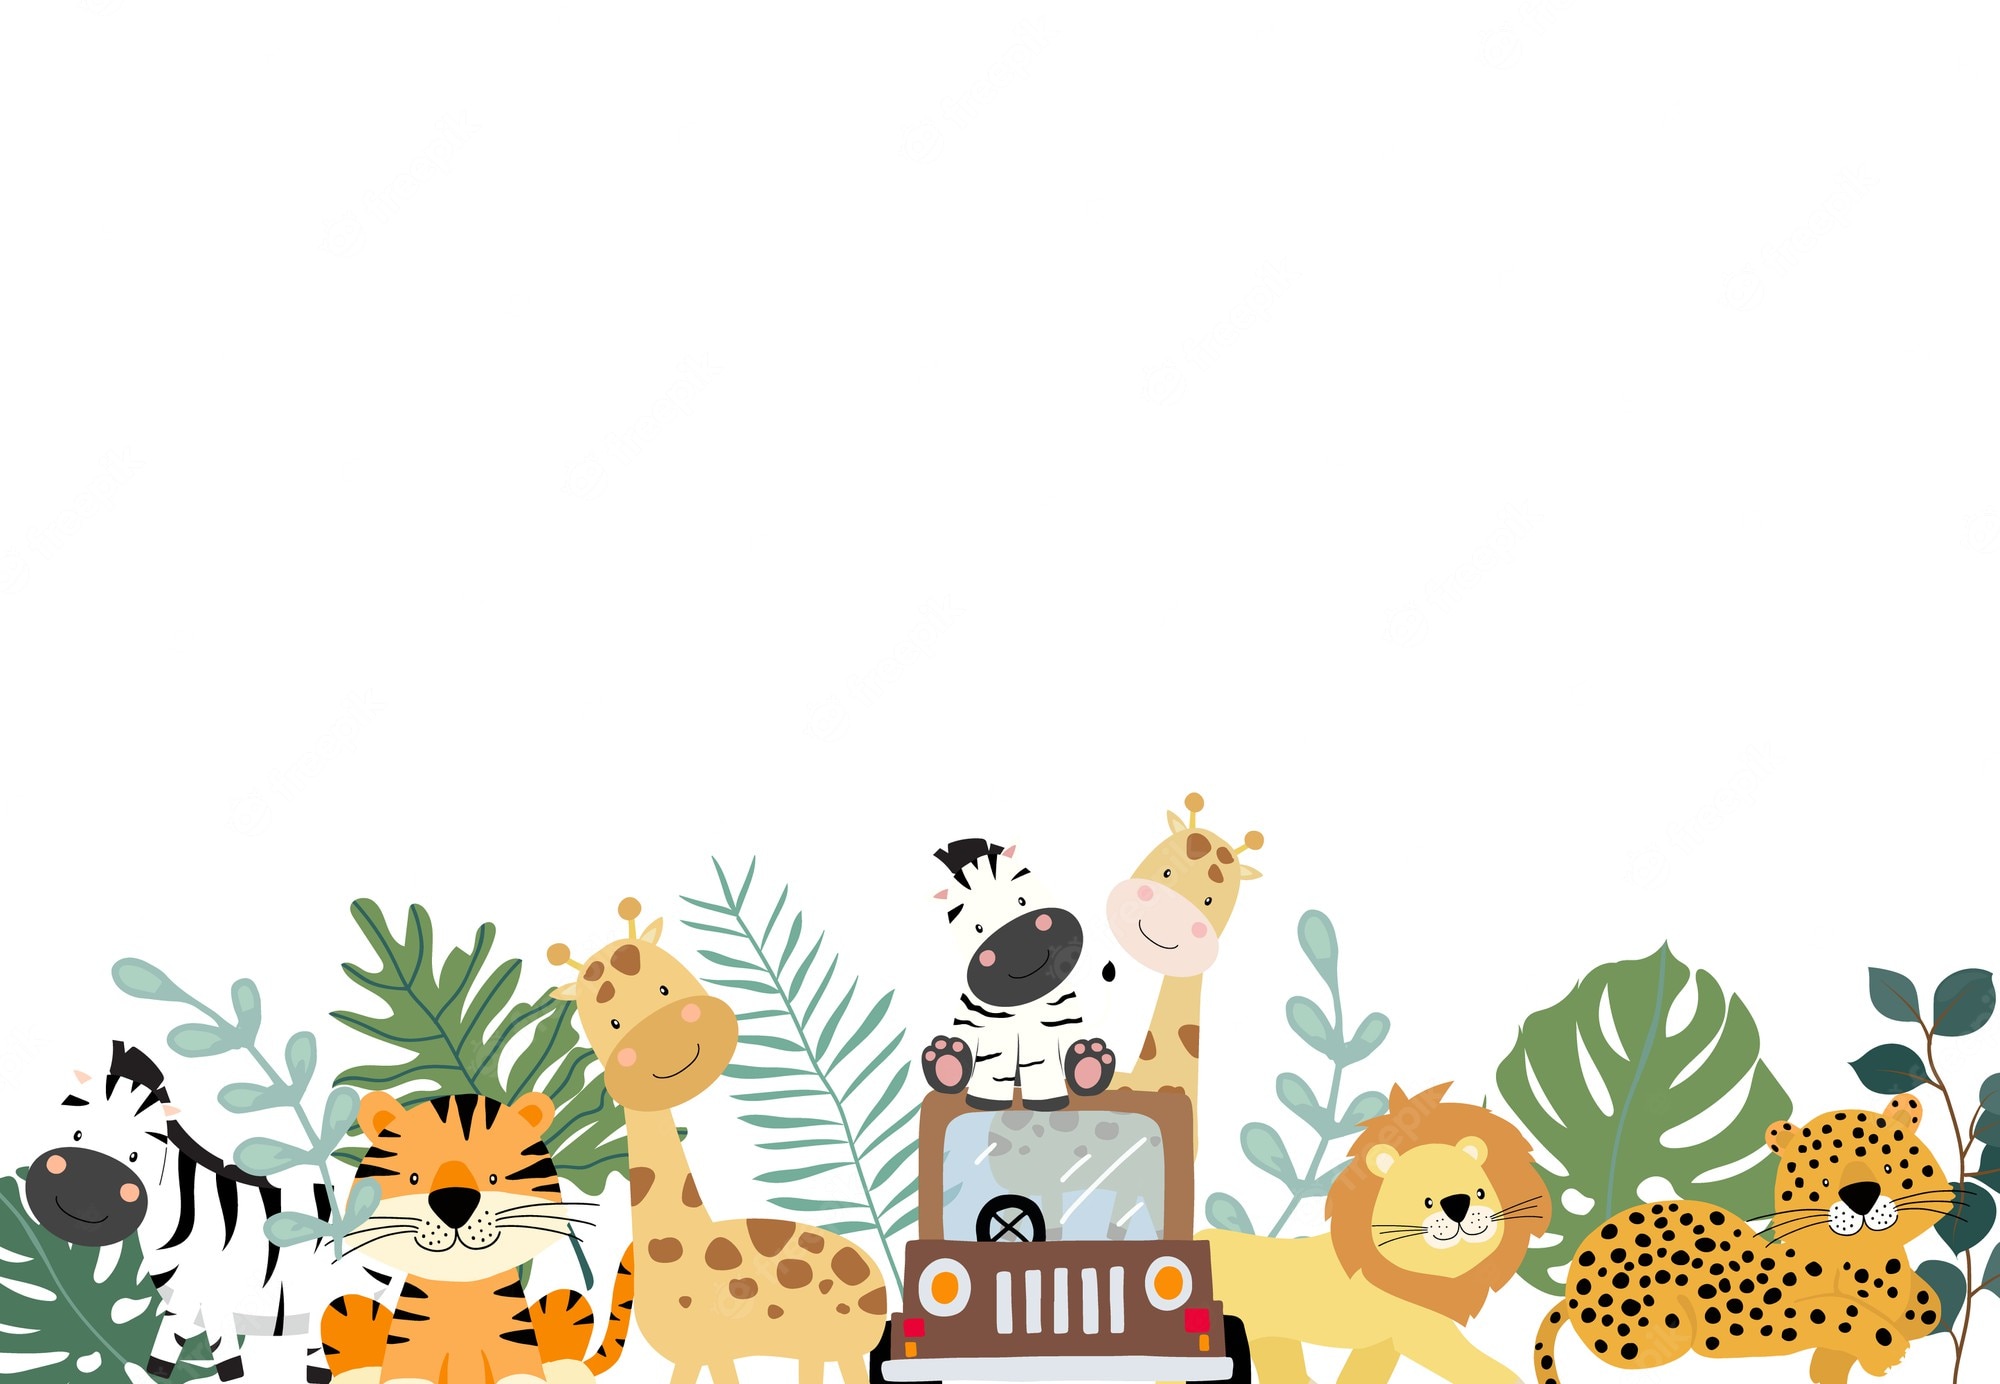 Safari animals cartoon Image. Free Vectors, & PSD